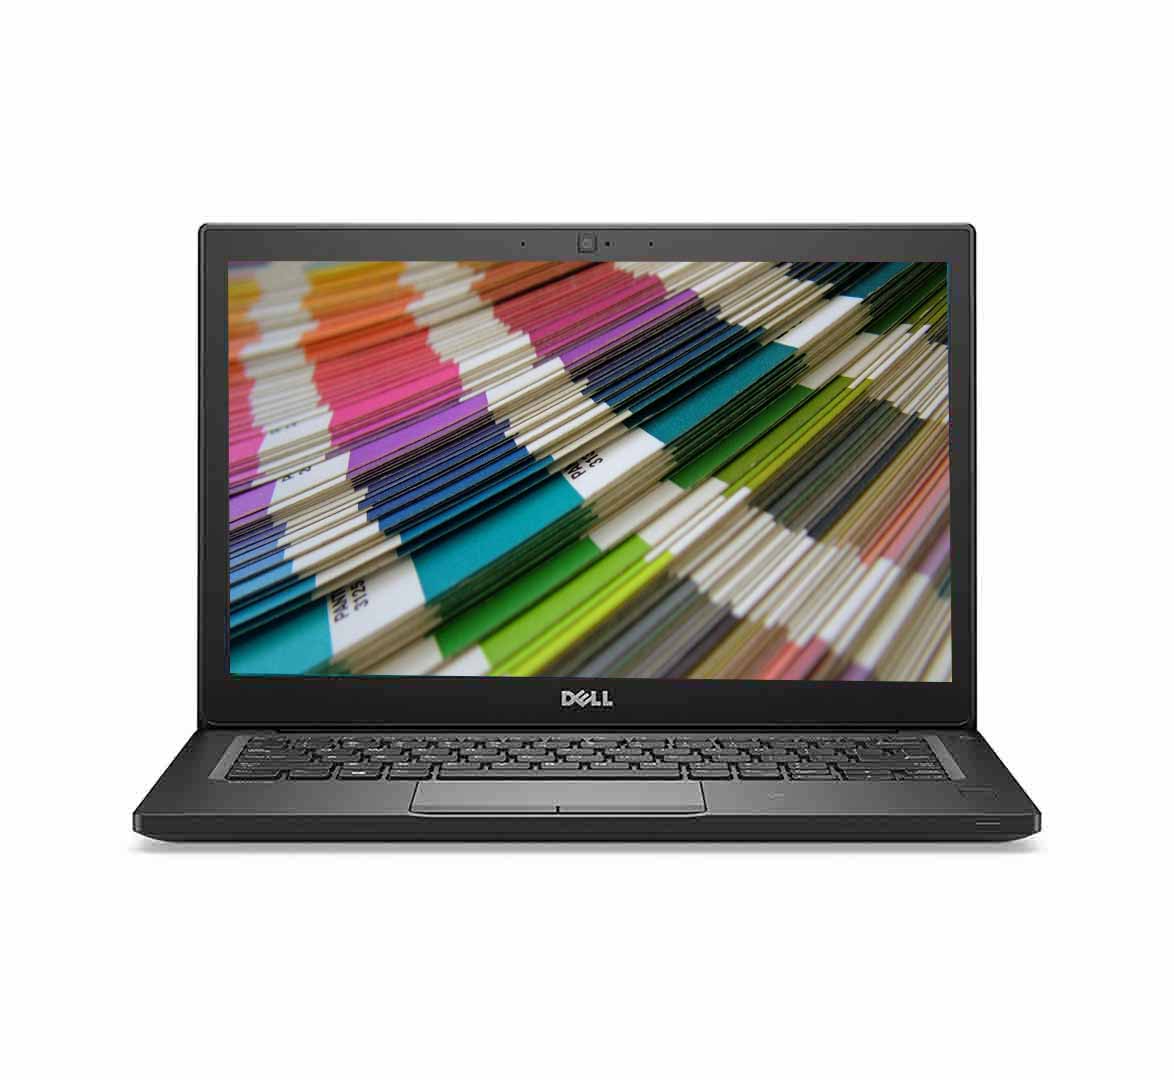 HP EliteBook 840 G1 Business Laptop, Intel Core i5-4th Generation 